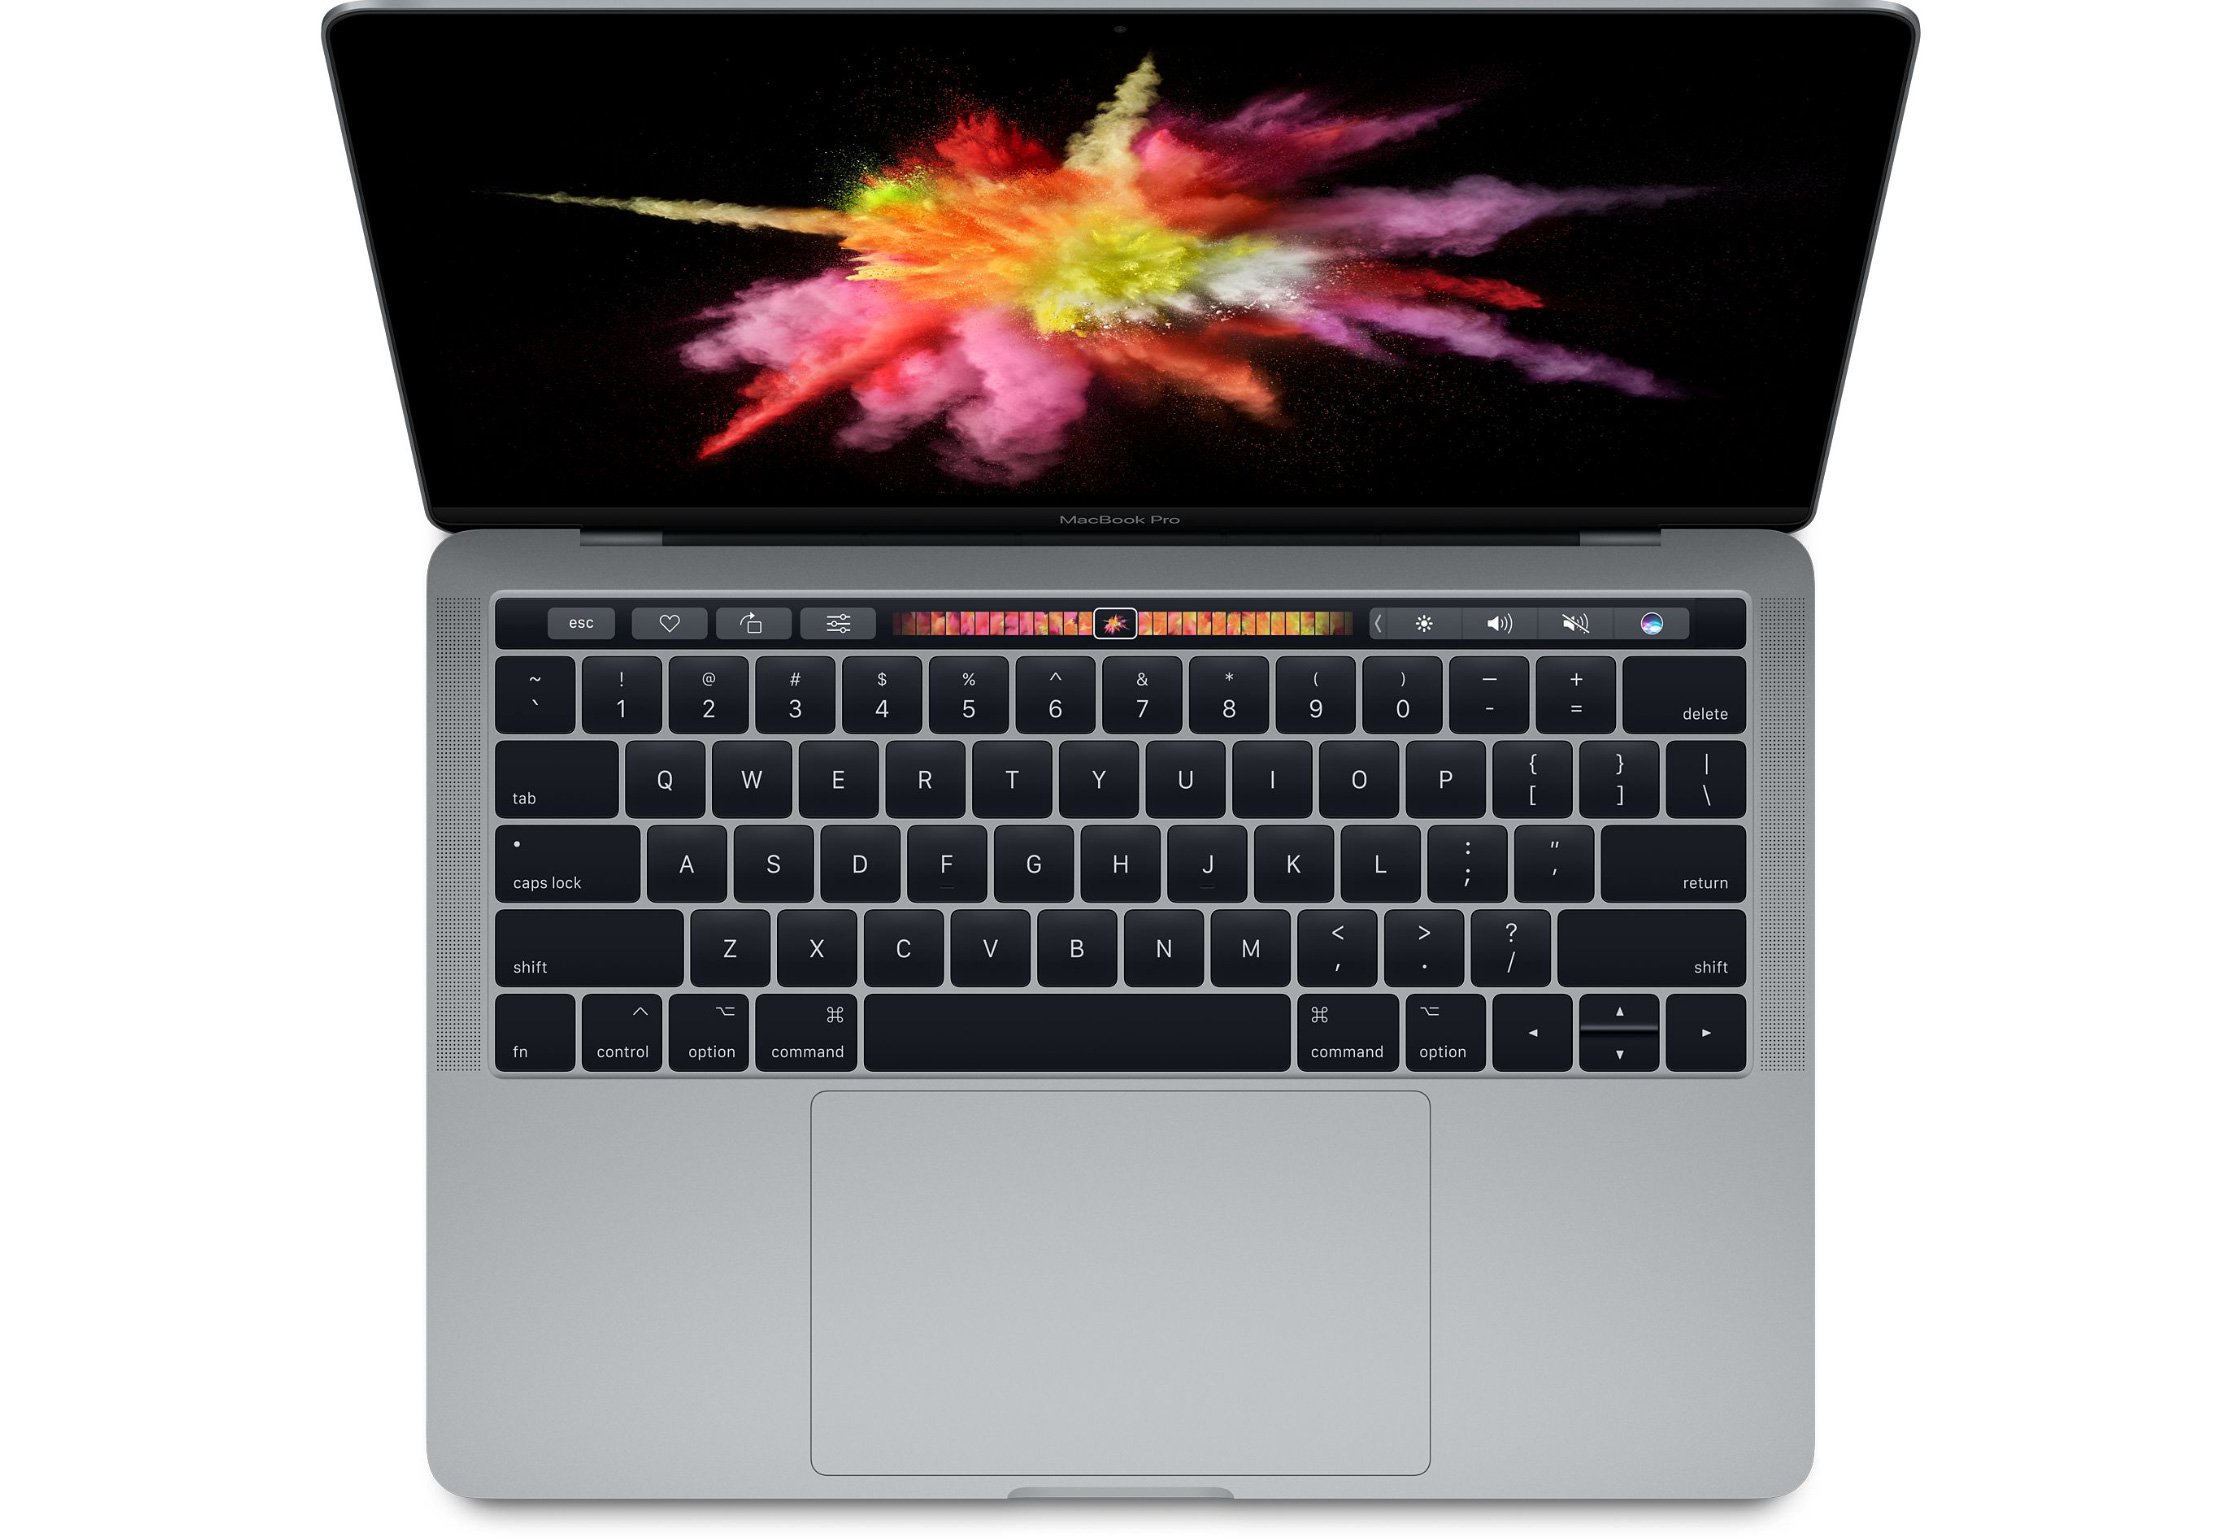 Apple macbook pro g4 specs ester c 500